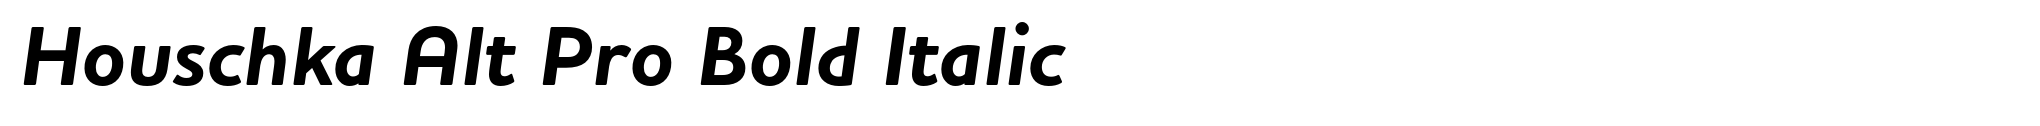 Houschka Alt Pro Bold Italic image